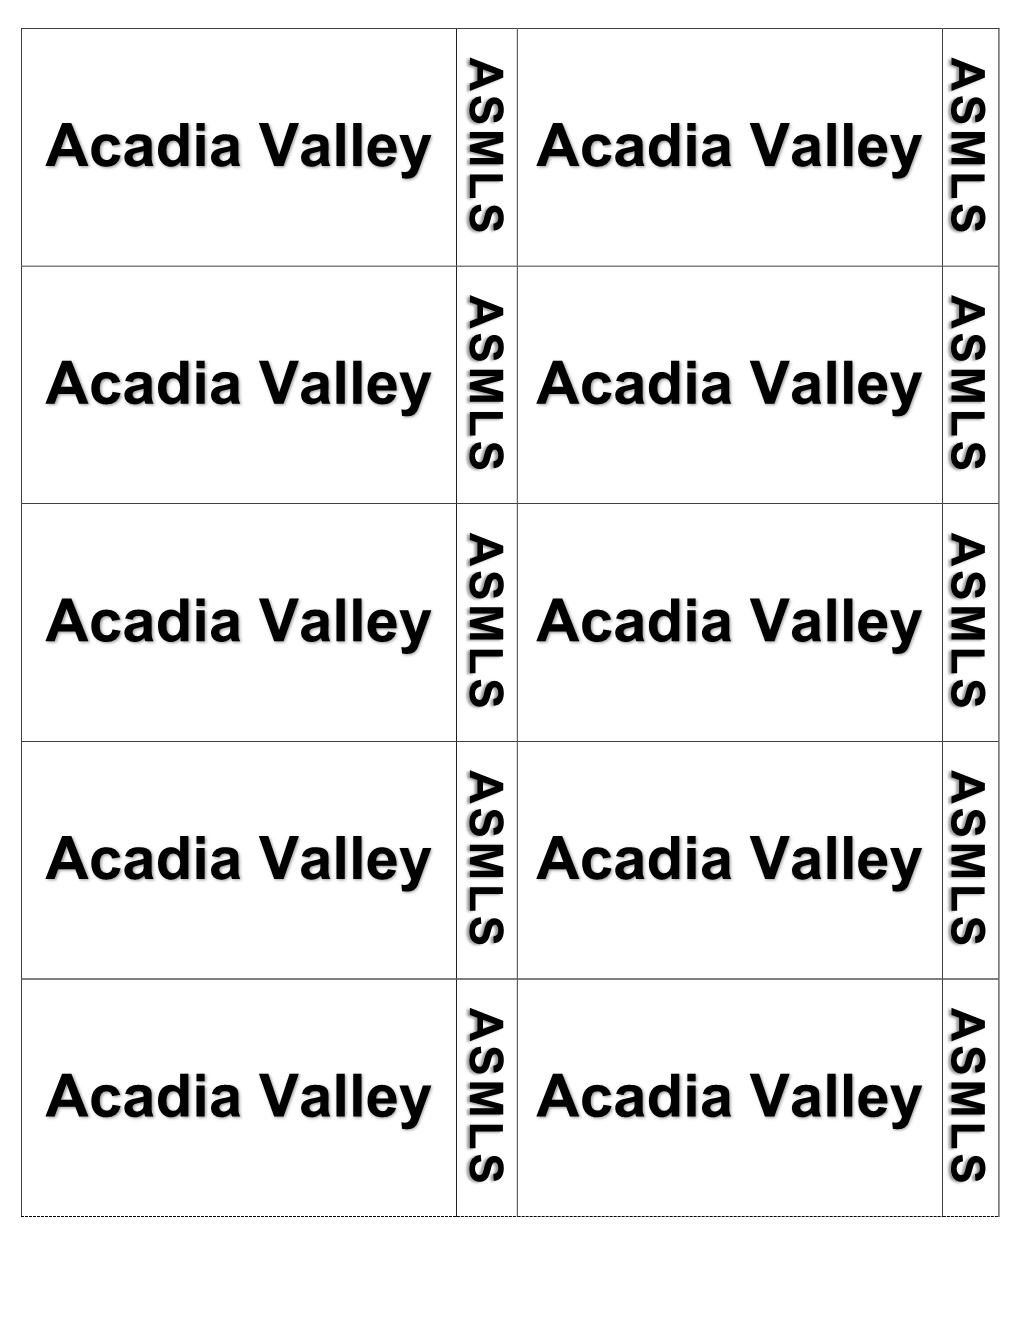 Acadia Valley Acadia Valley Acadia Valley Acadia Valley Acadia